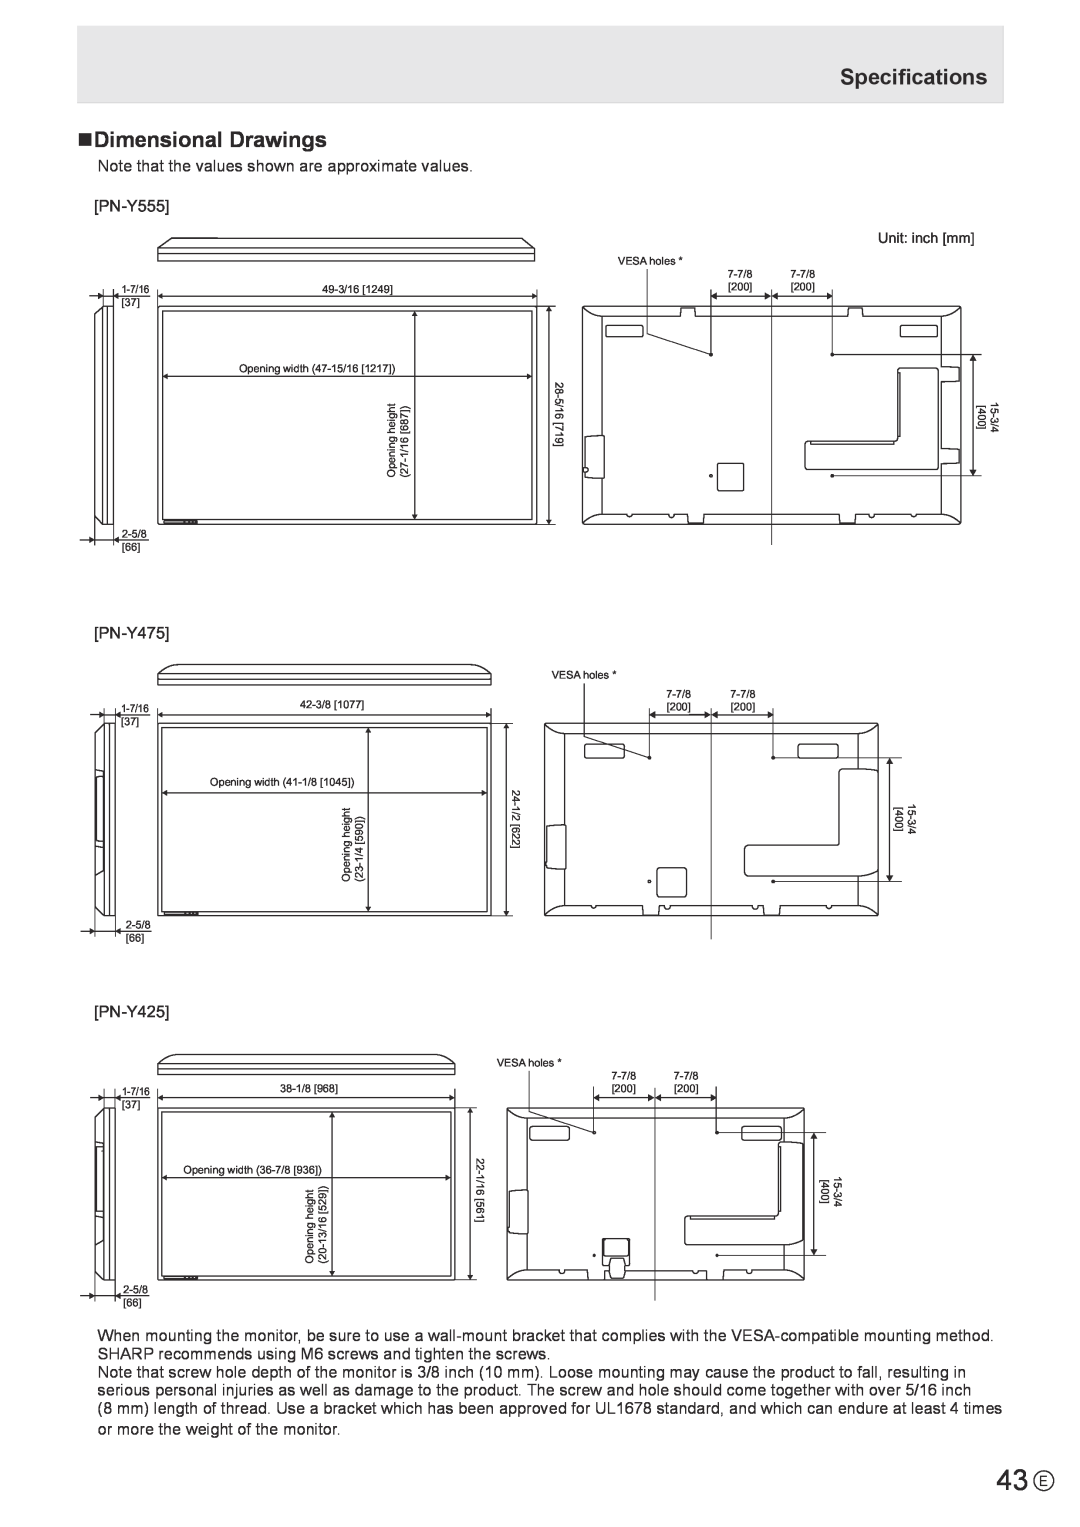 Sharp PN-Y475, PN-Y555, PN-Y425 operation manual 43 E, nDimensional Drawings, Specifications 